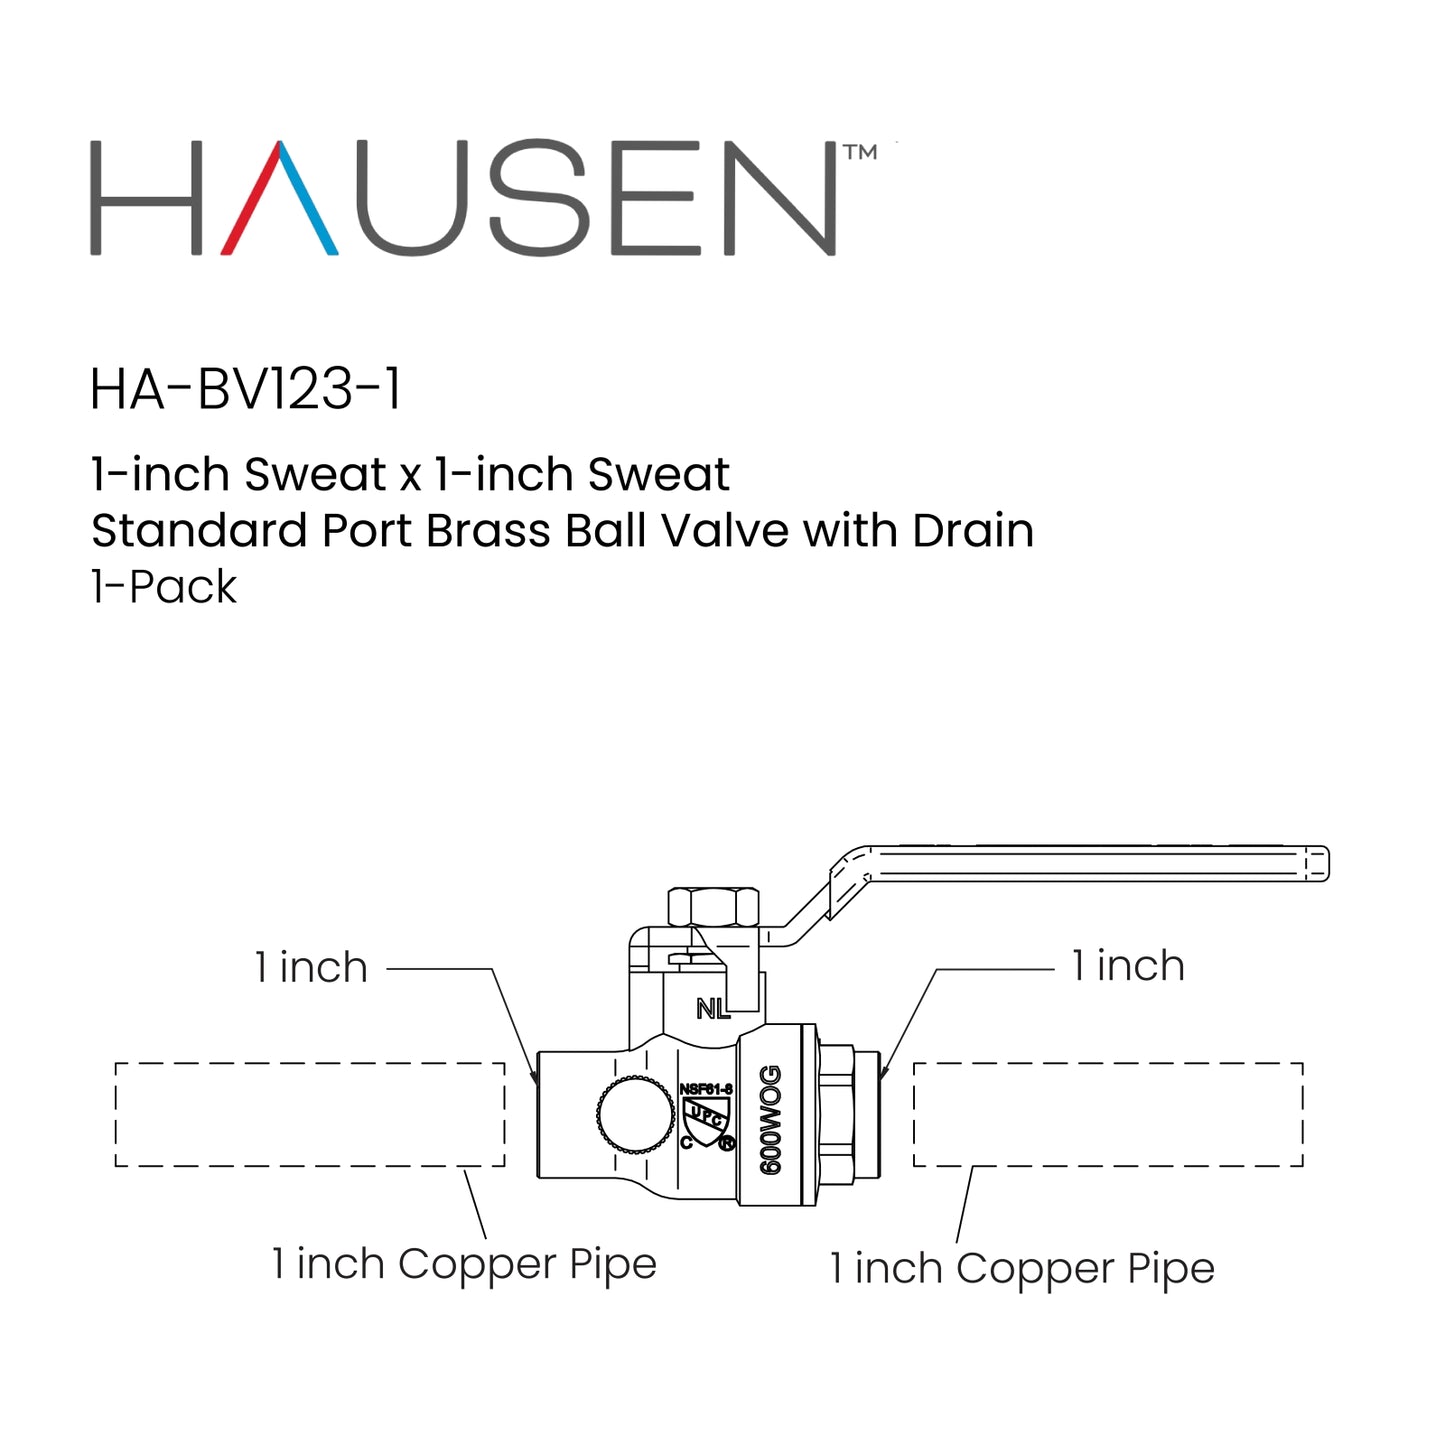 Hausen 1-inch Sweat x 1-inch Sweat Standard Port Brass Ball Valve with Drain, 1-Pack